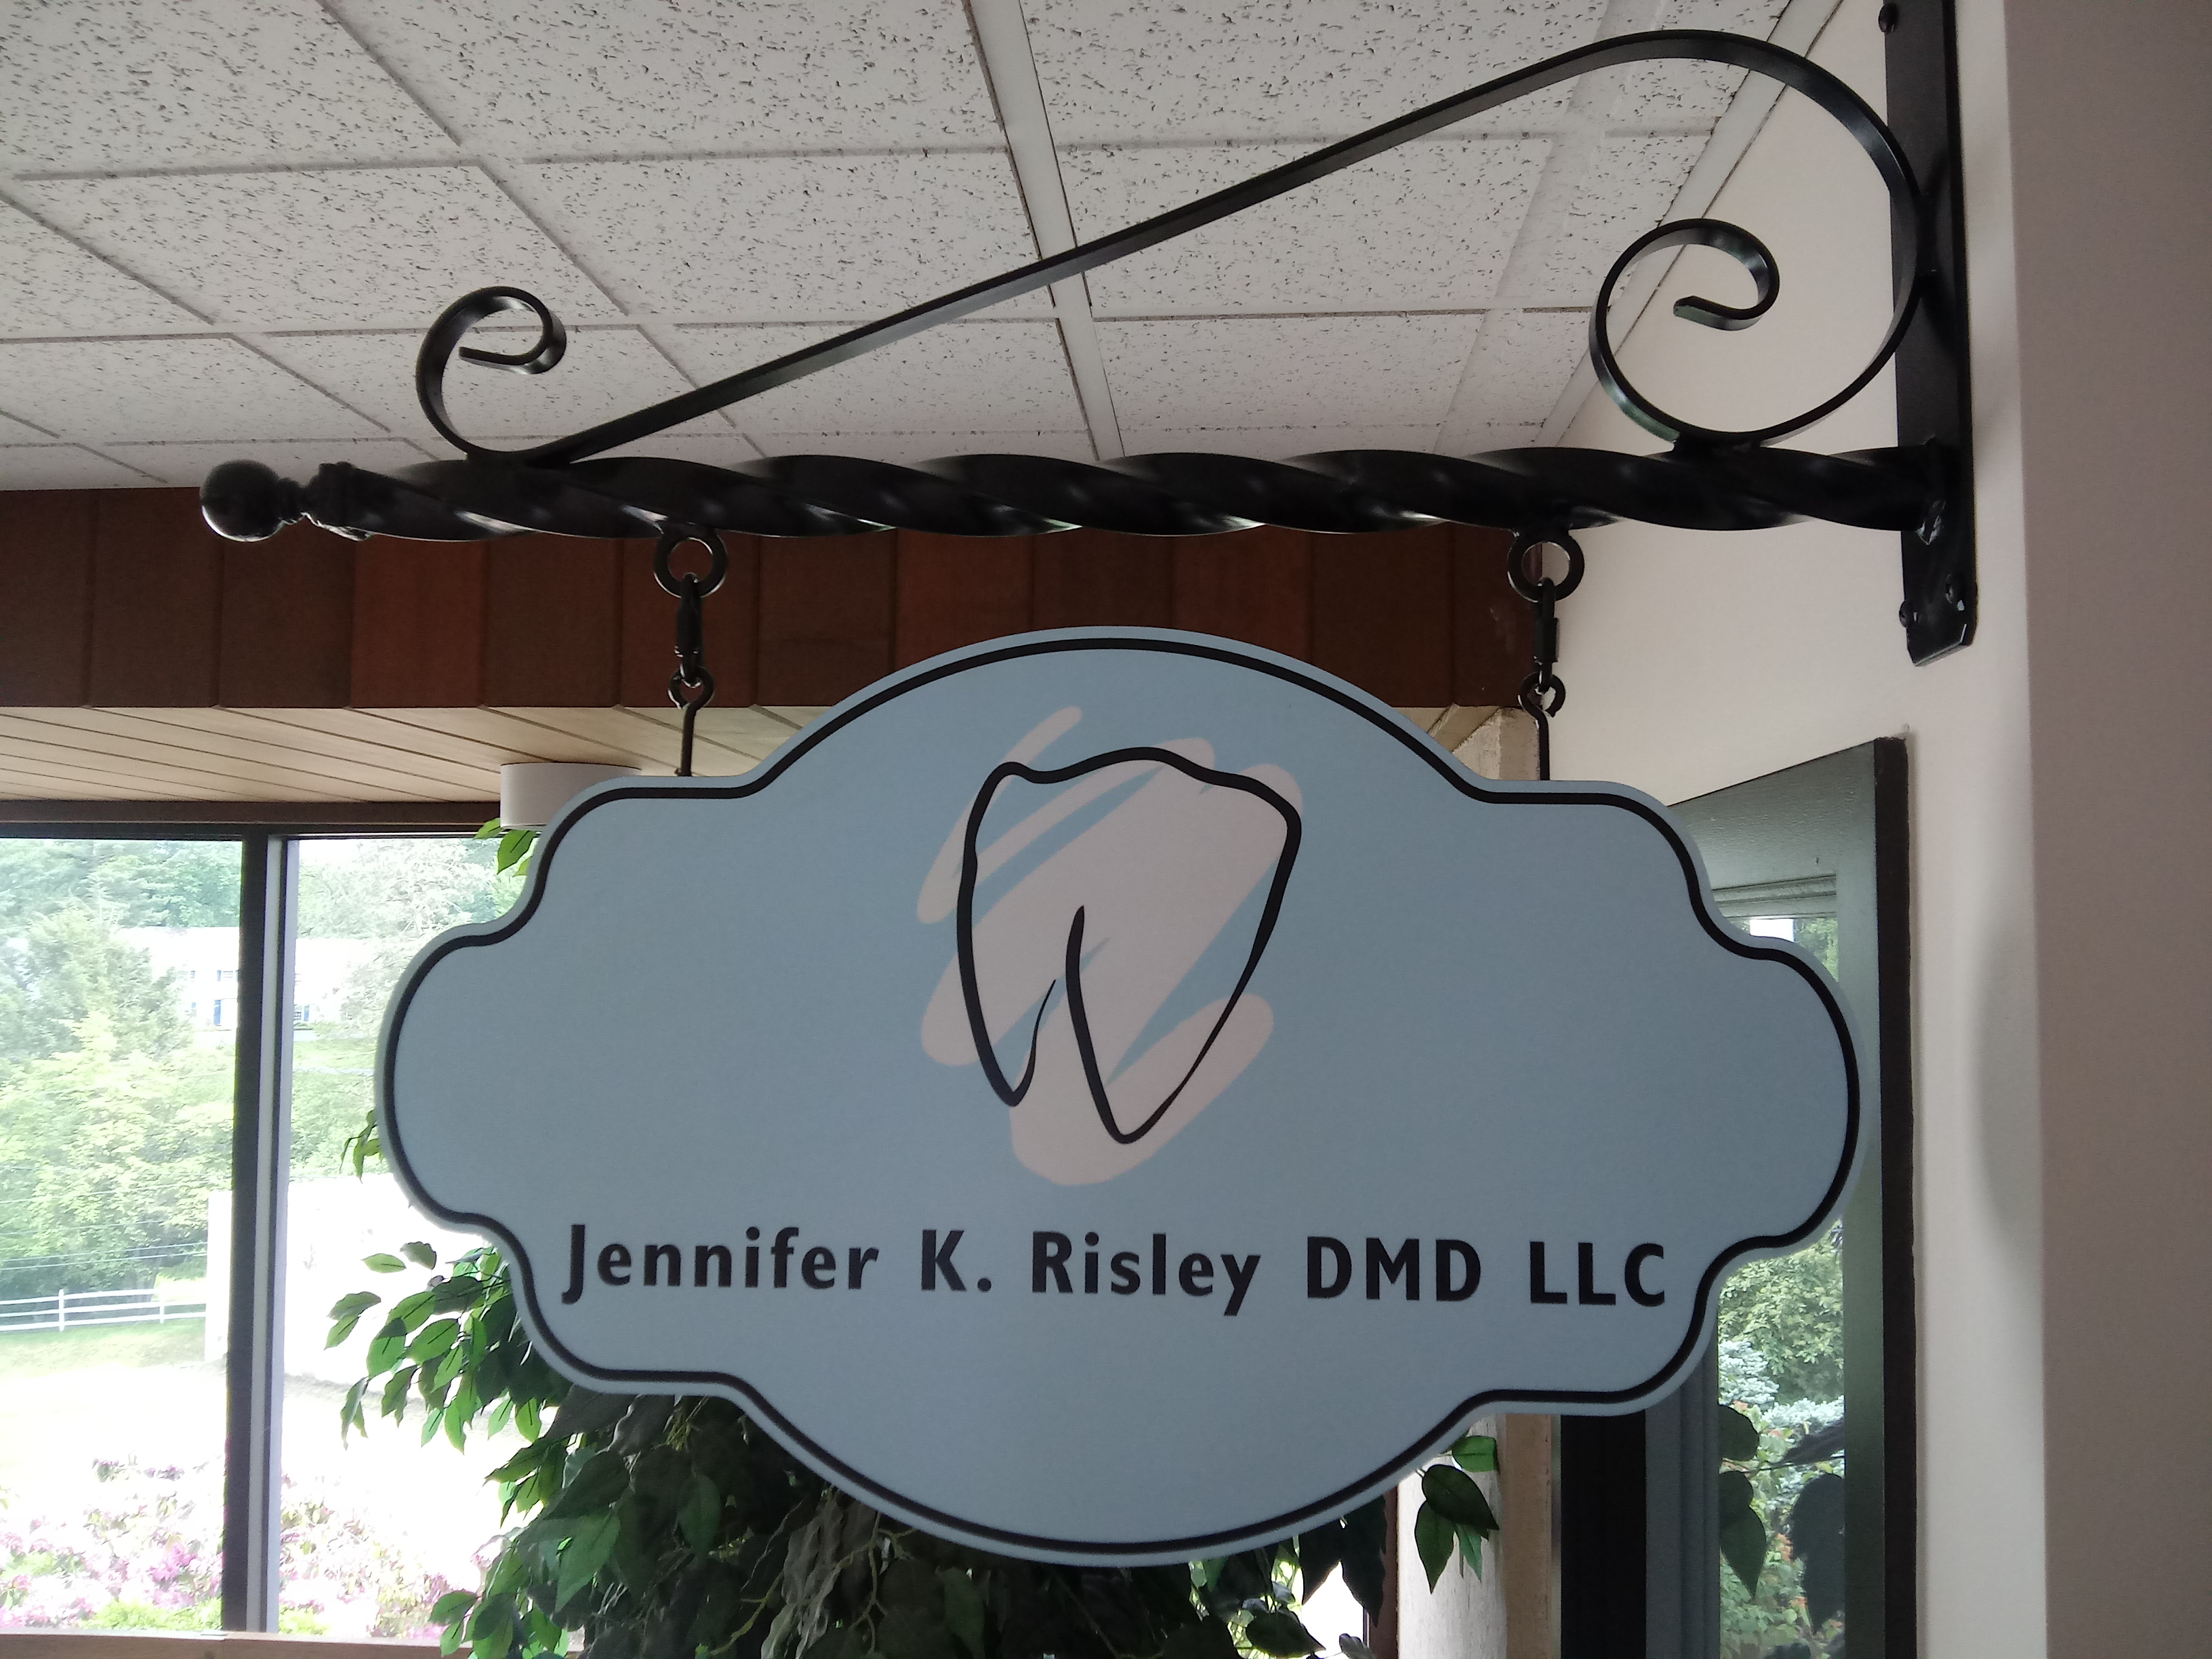 Dr. Jennifer K. Risley DMD LLC Sign